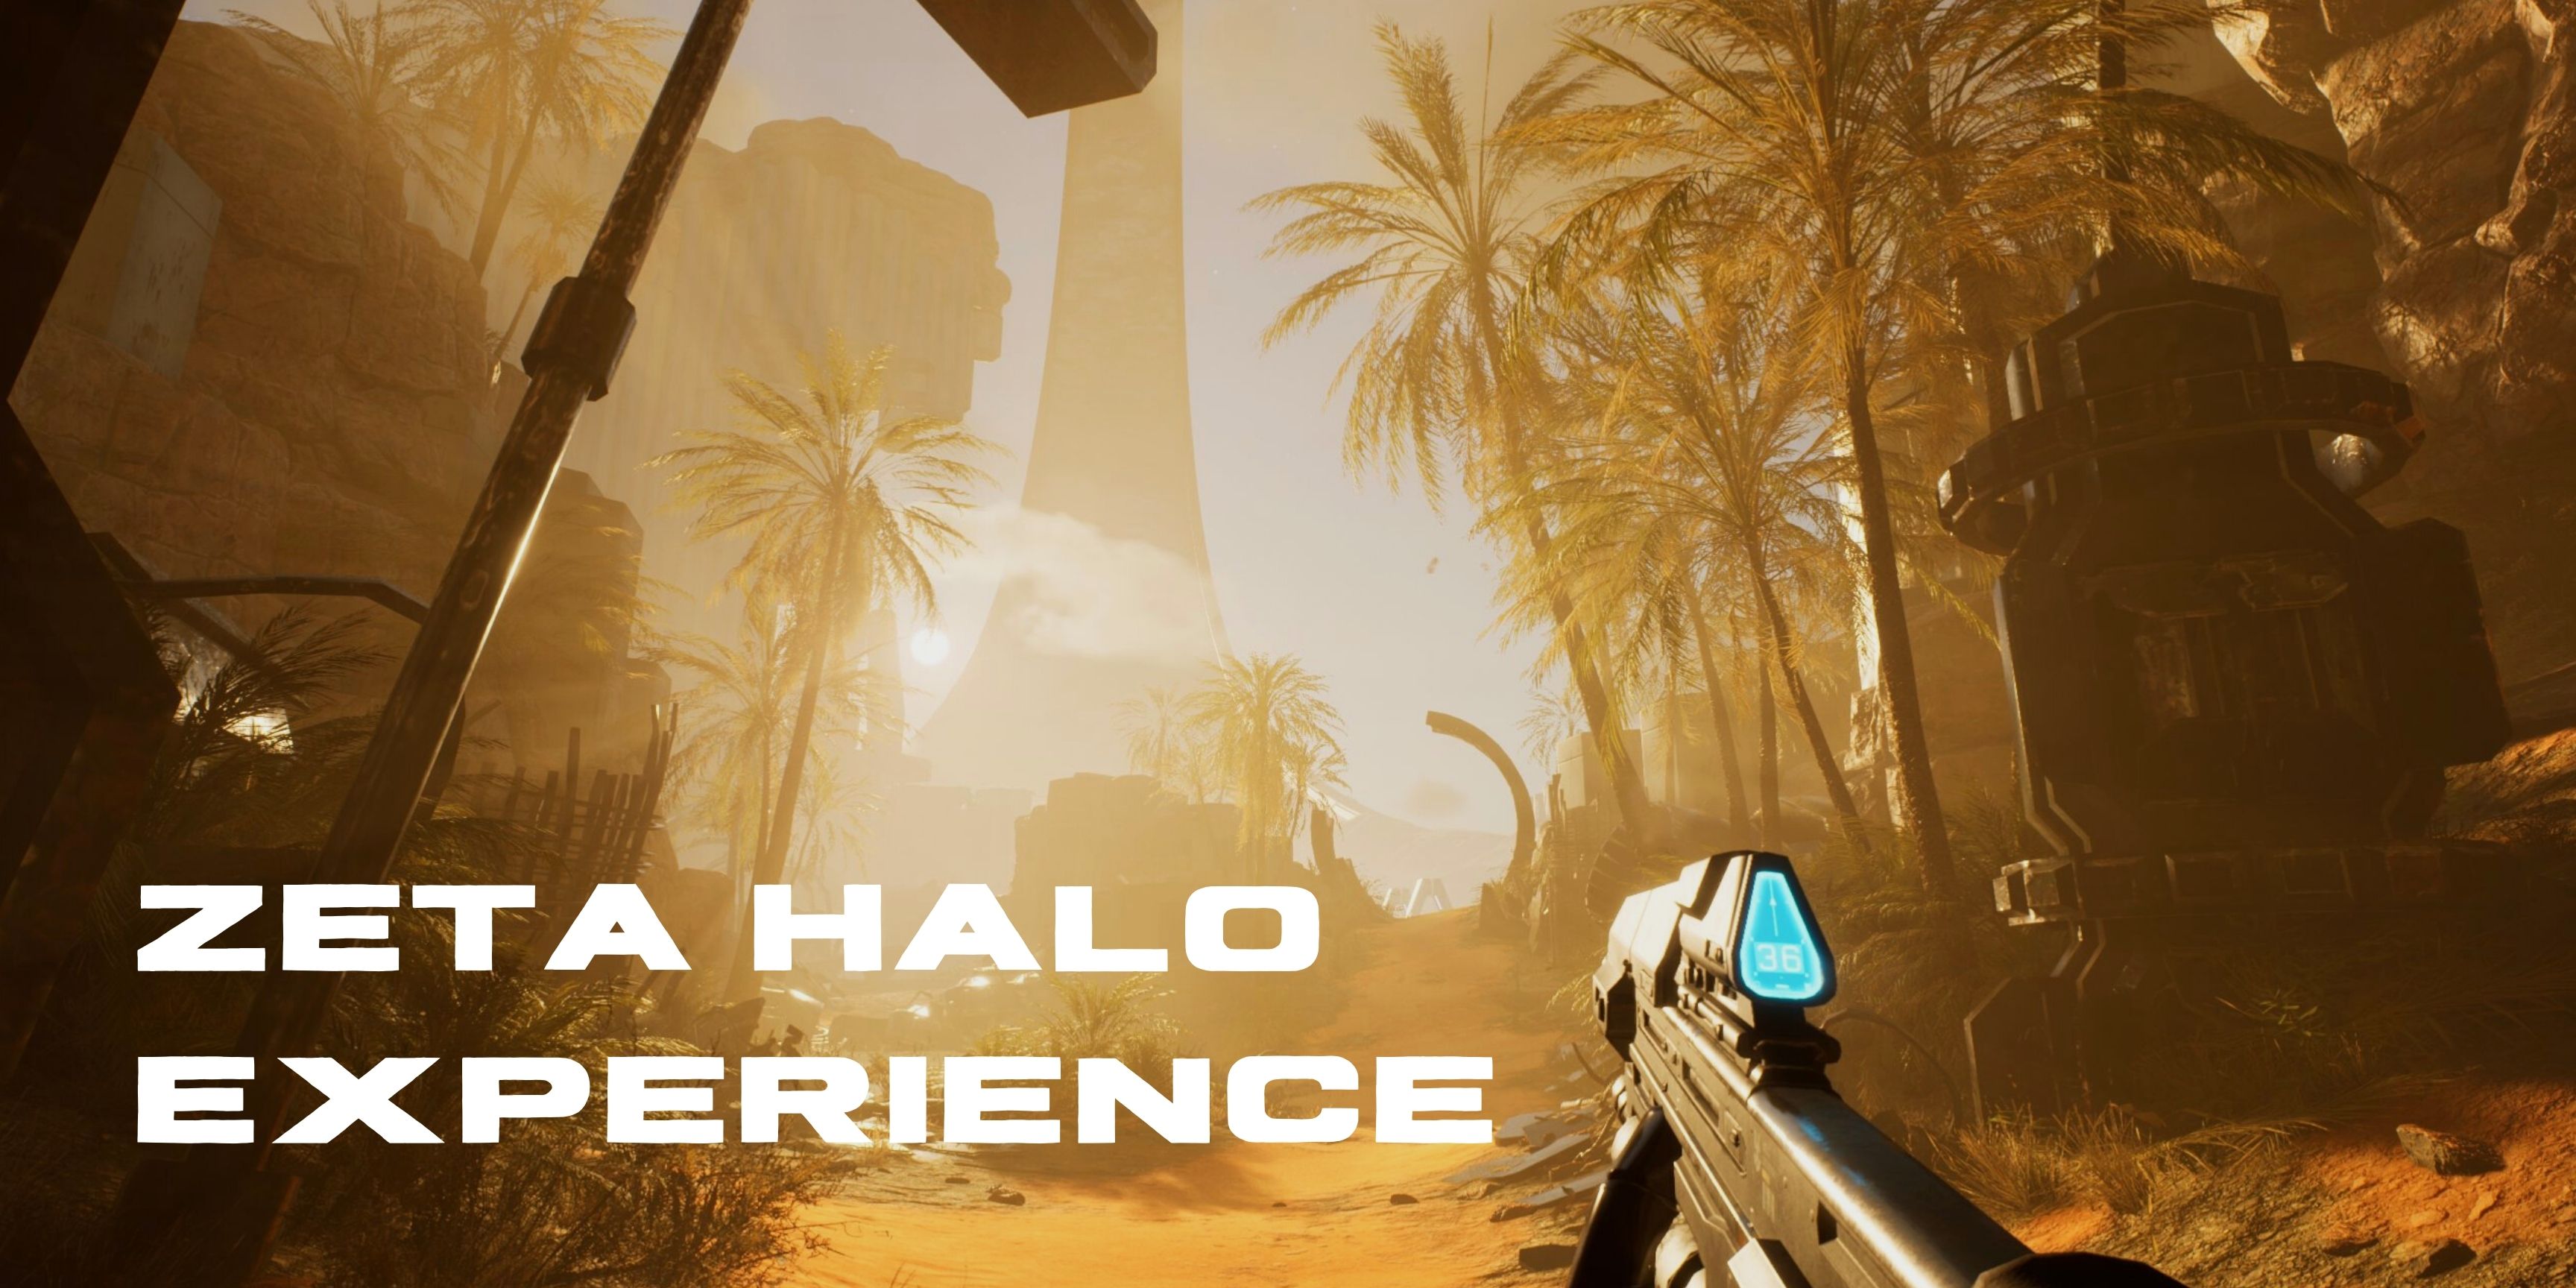 The Zeta Halo Experience - Desert Biome